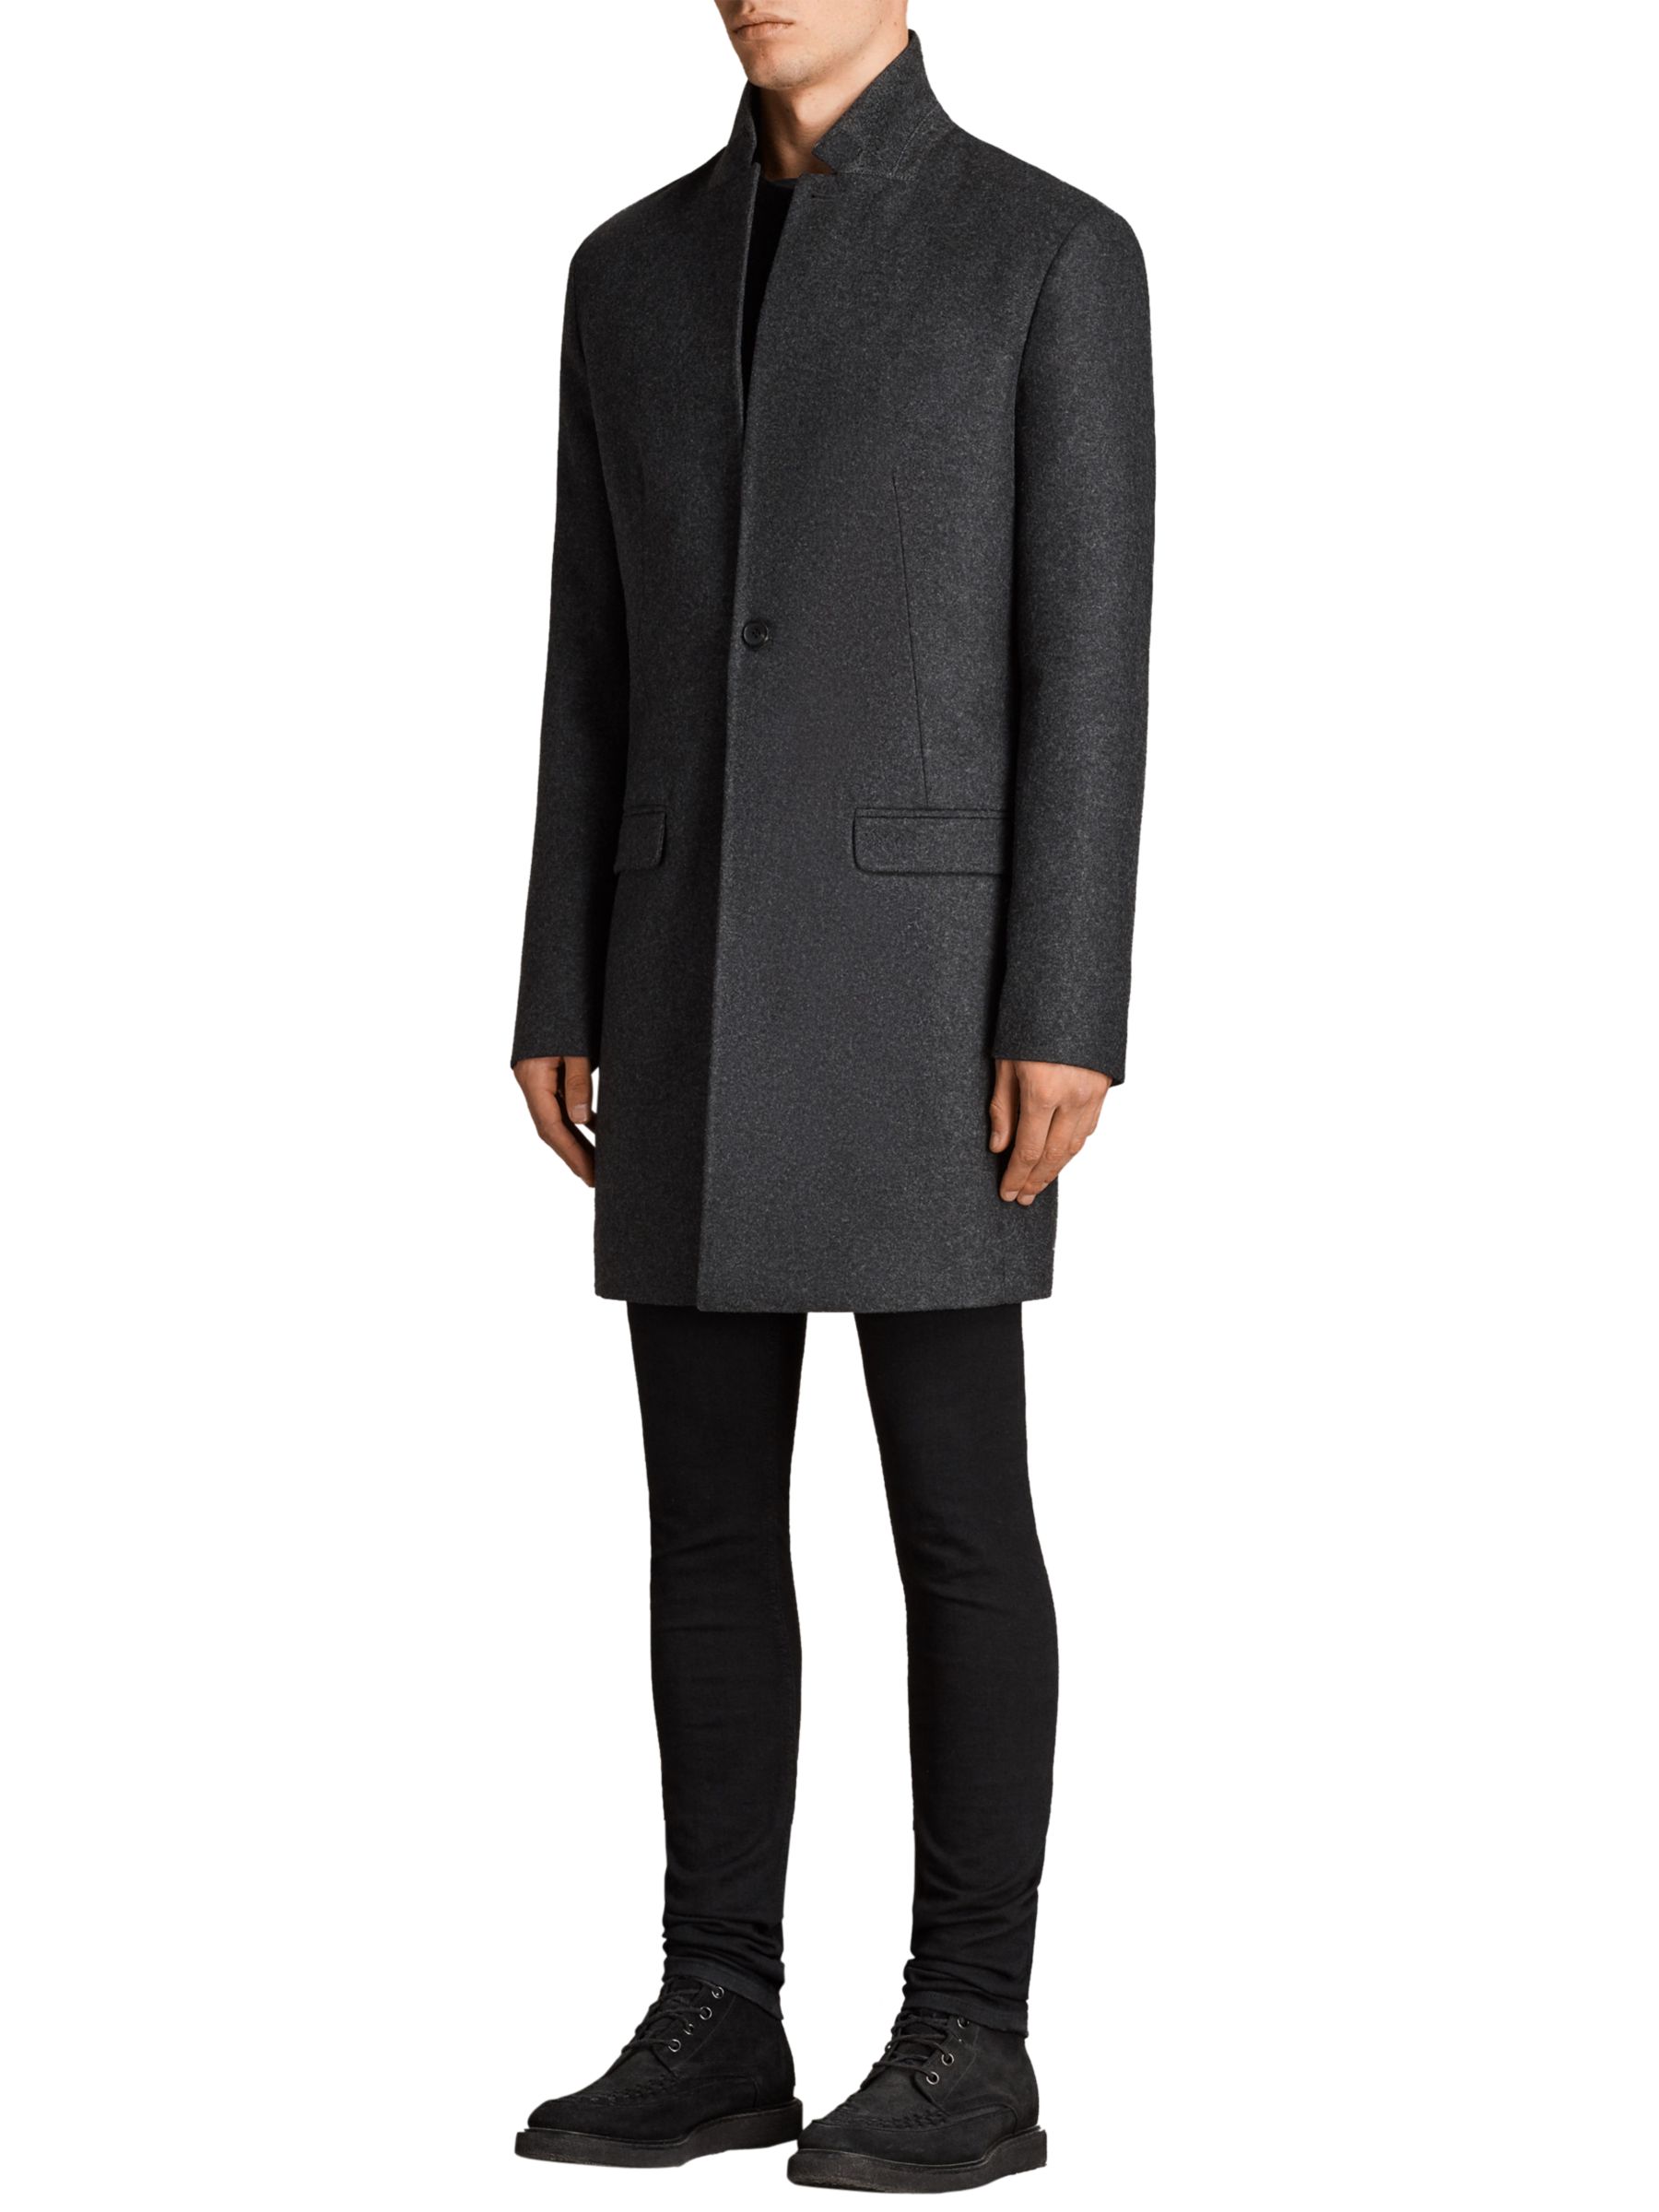 AllSaints Meka Wool Rich Overcoat, Charcoal Grey at John Lewis & Partners